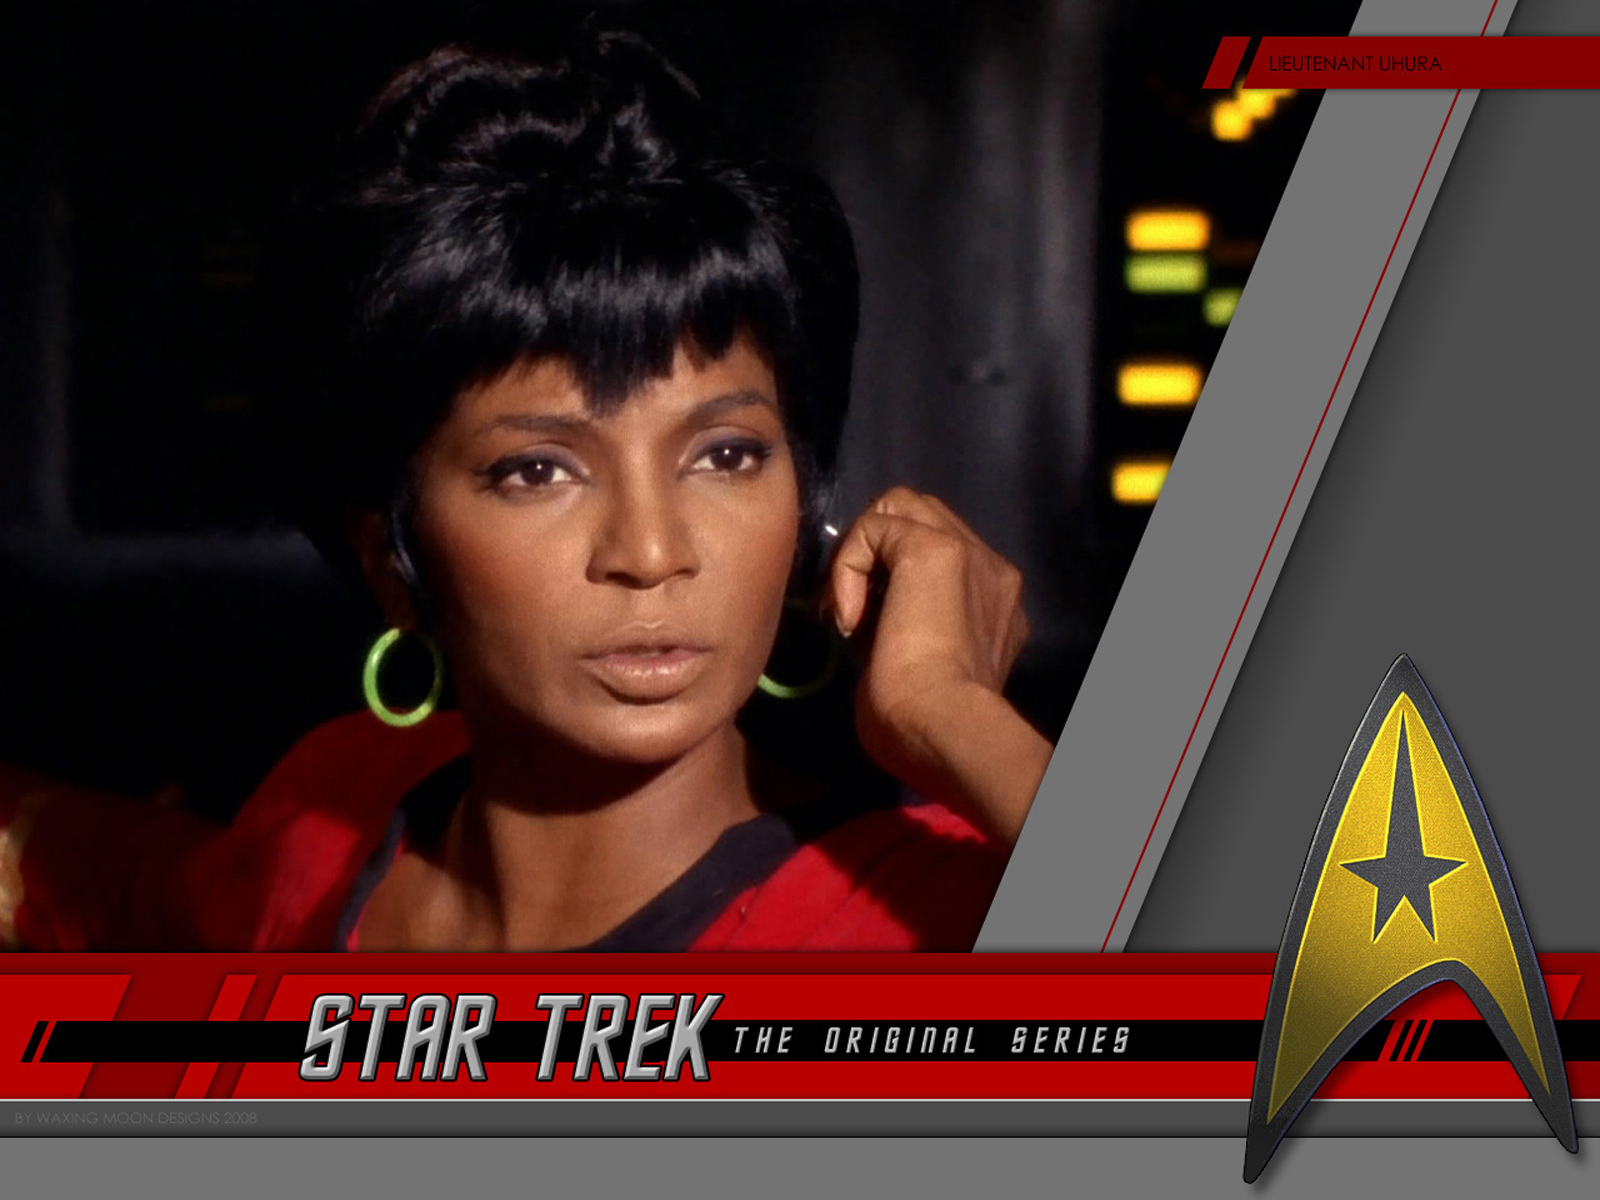 - Star Trek Lieutenant Uhura - free Star Trek computer desktop wallpaper, pictures, images.